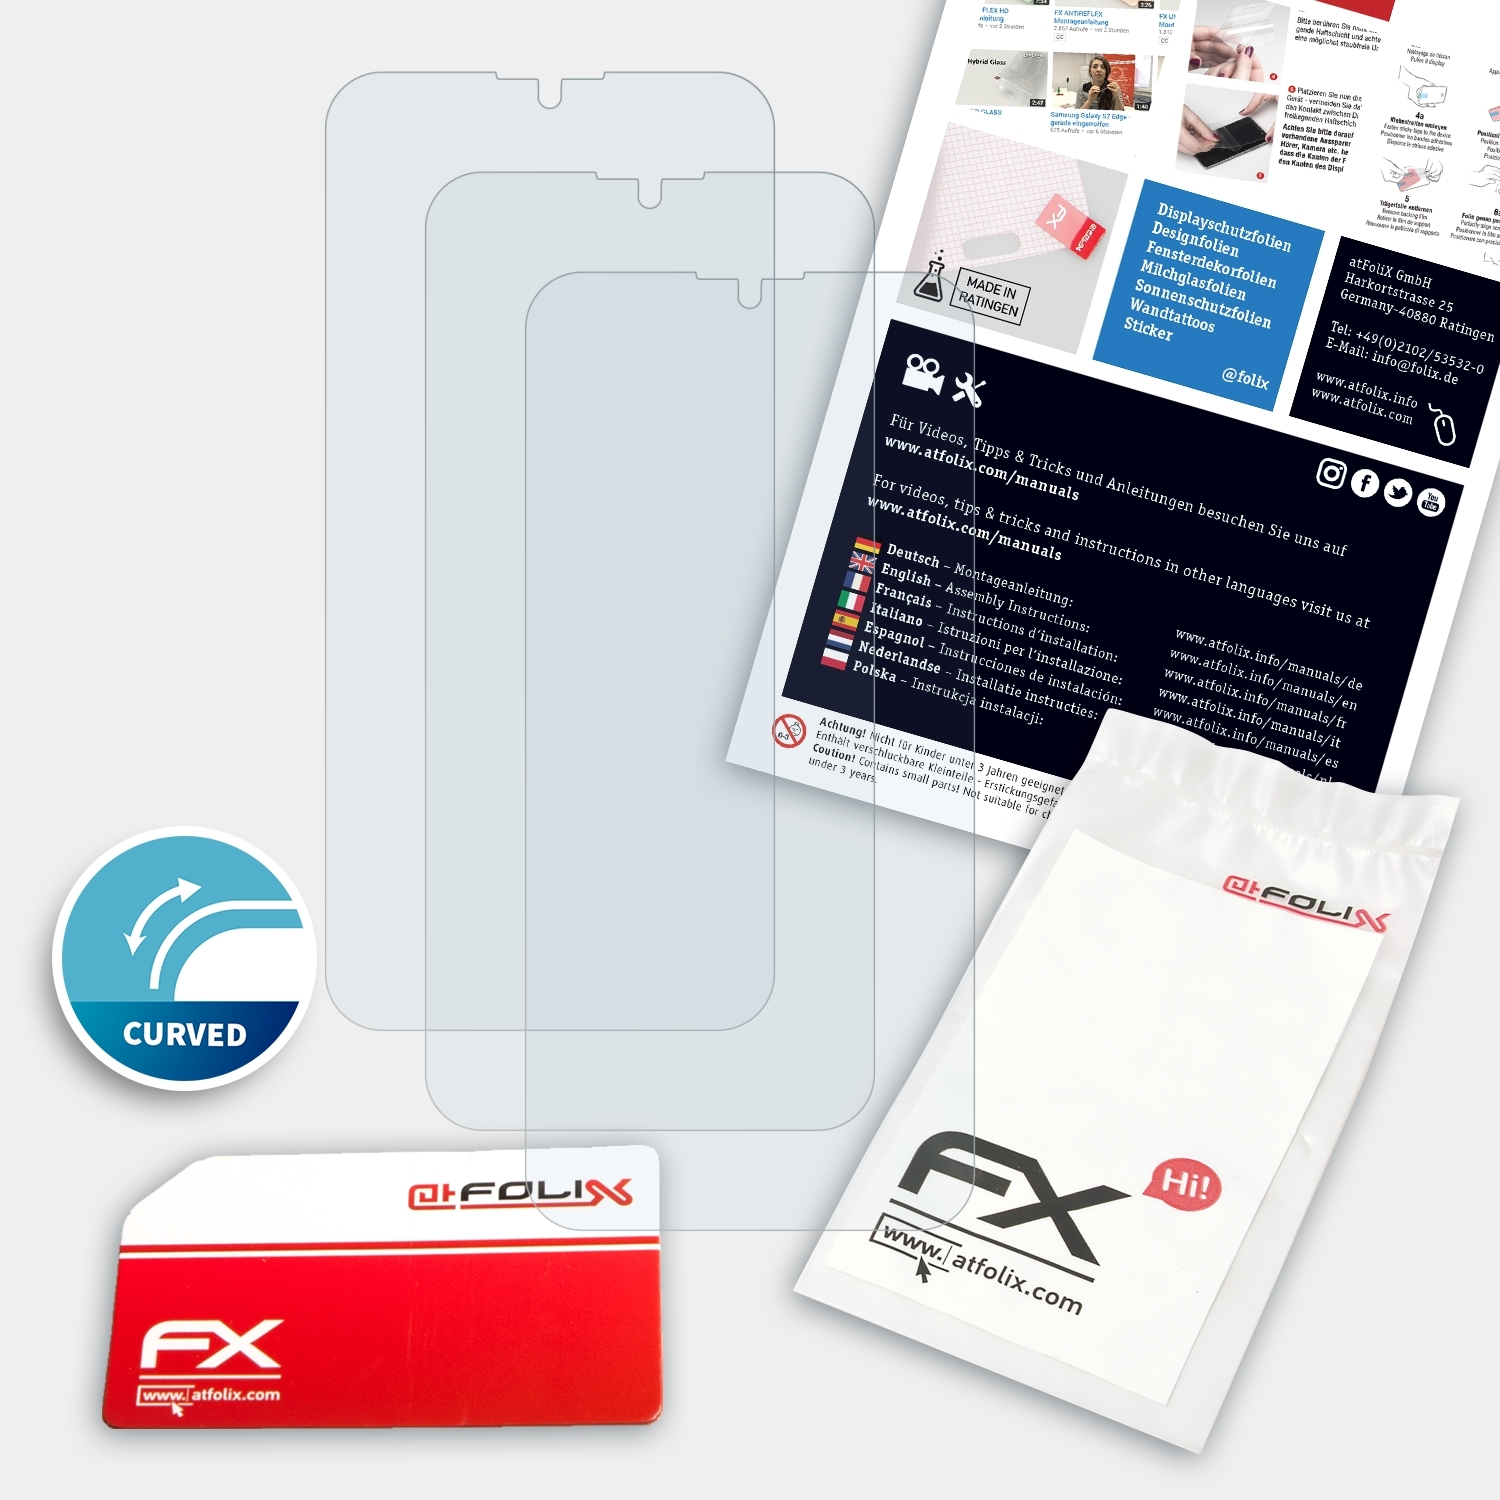 FX-ActiFleX Lite 3x Nova ATFOLIX Huawei Displayschutz(für 3)